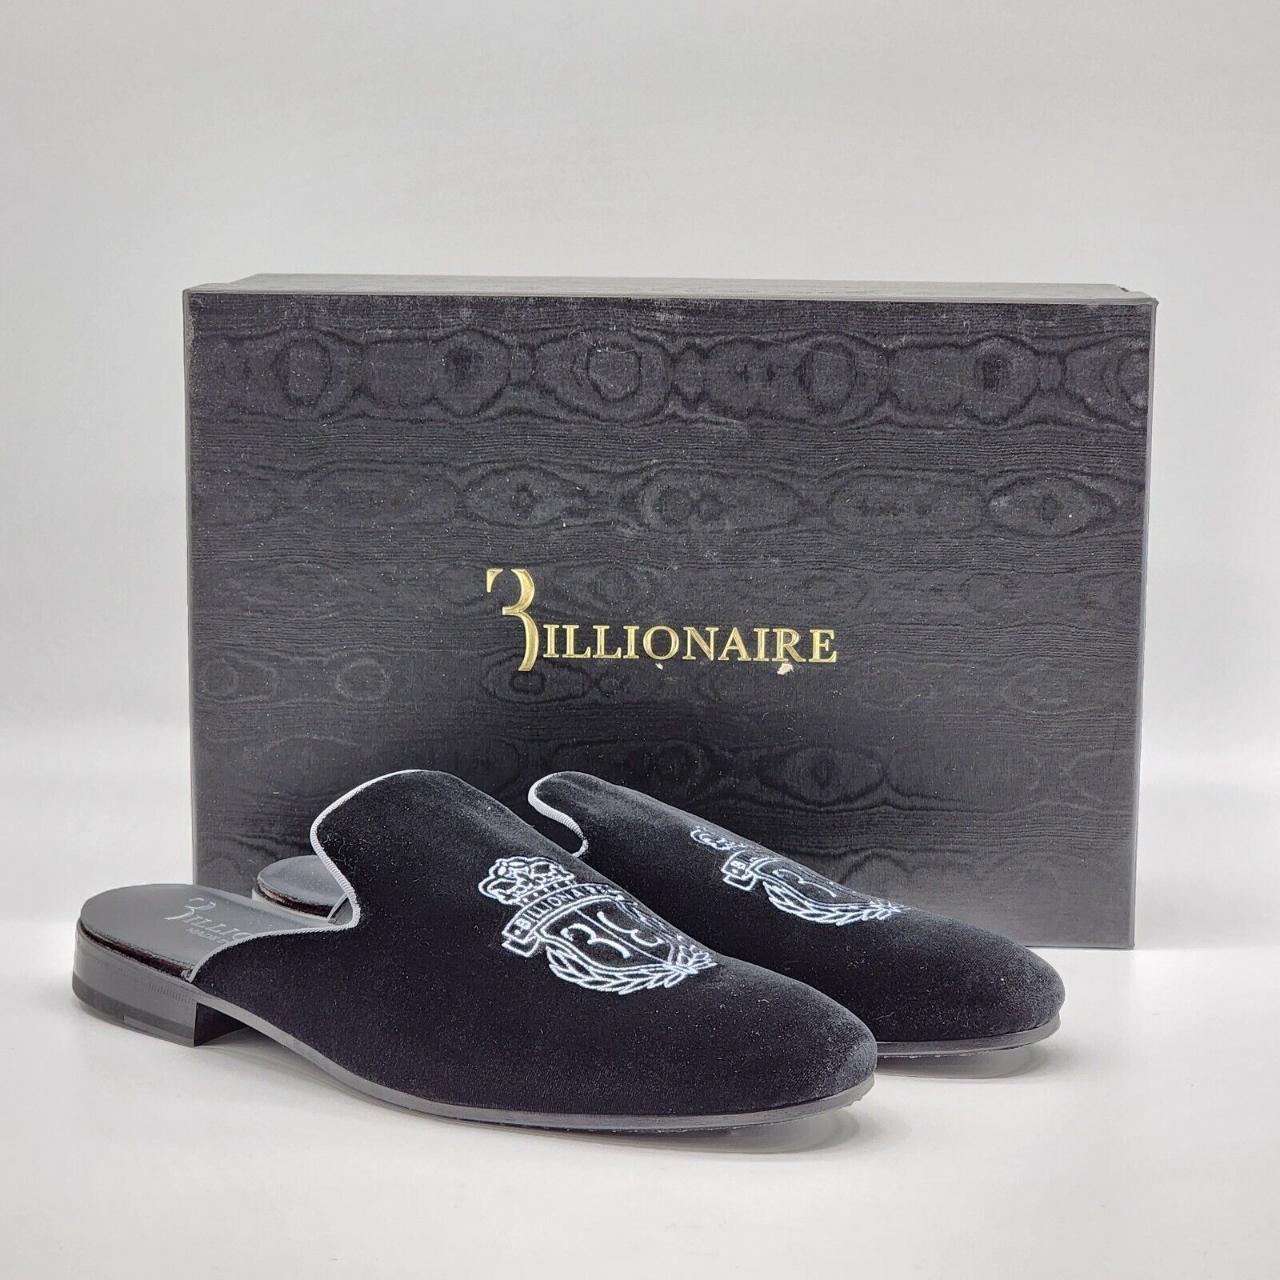 Billionaire Men's Black and White Loafers (8)